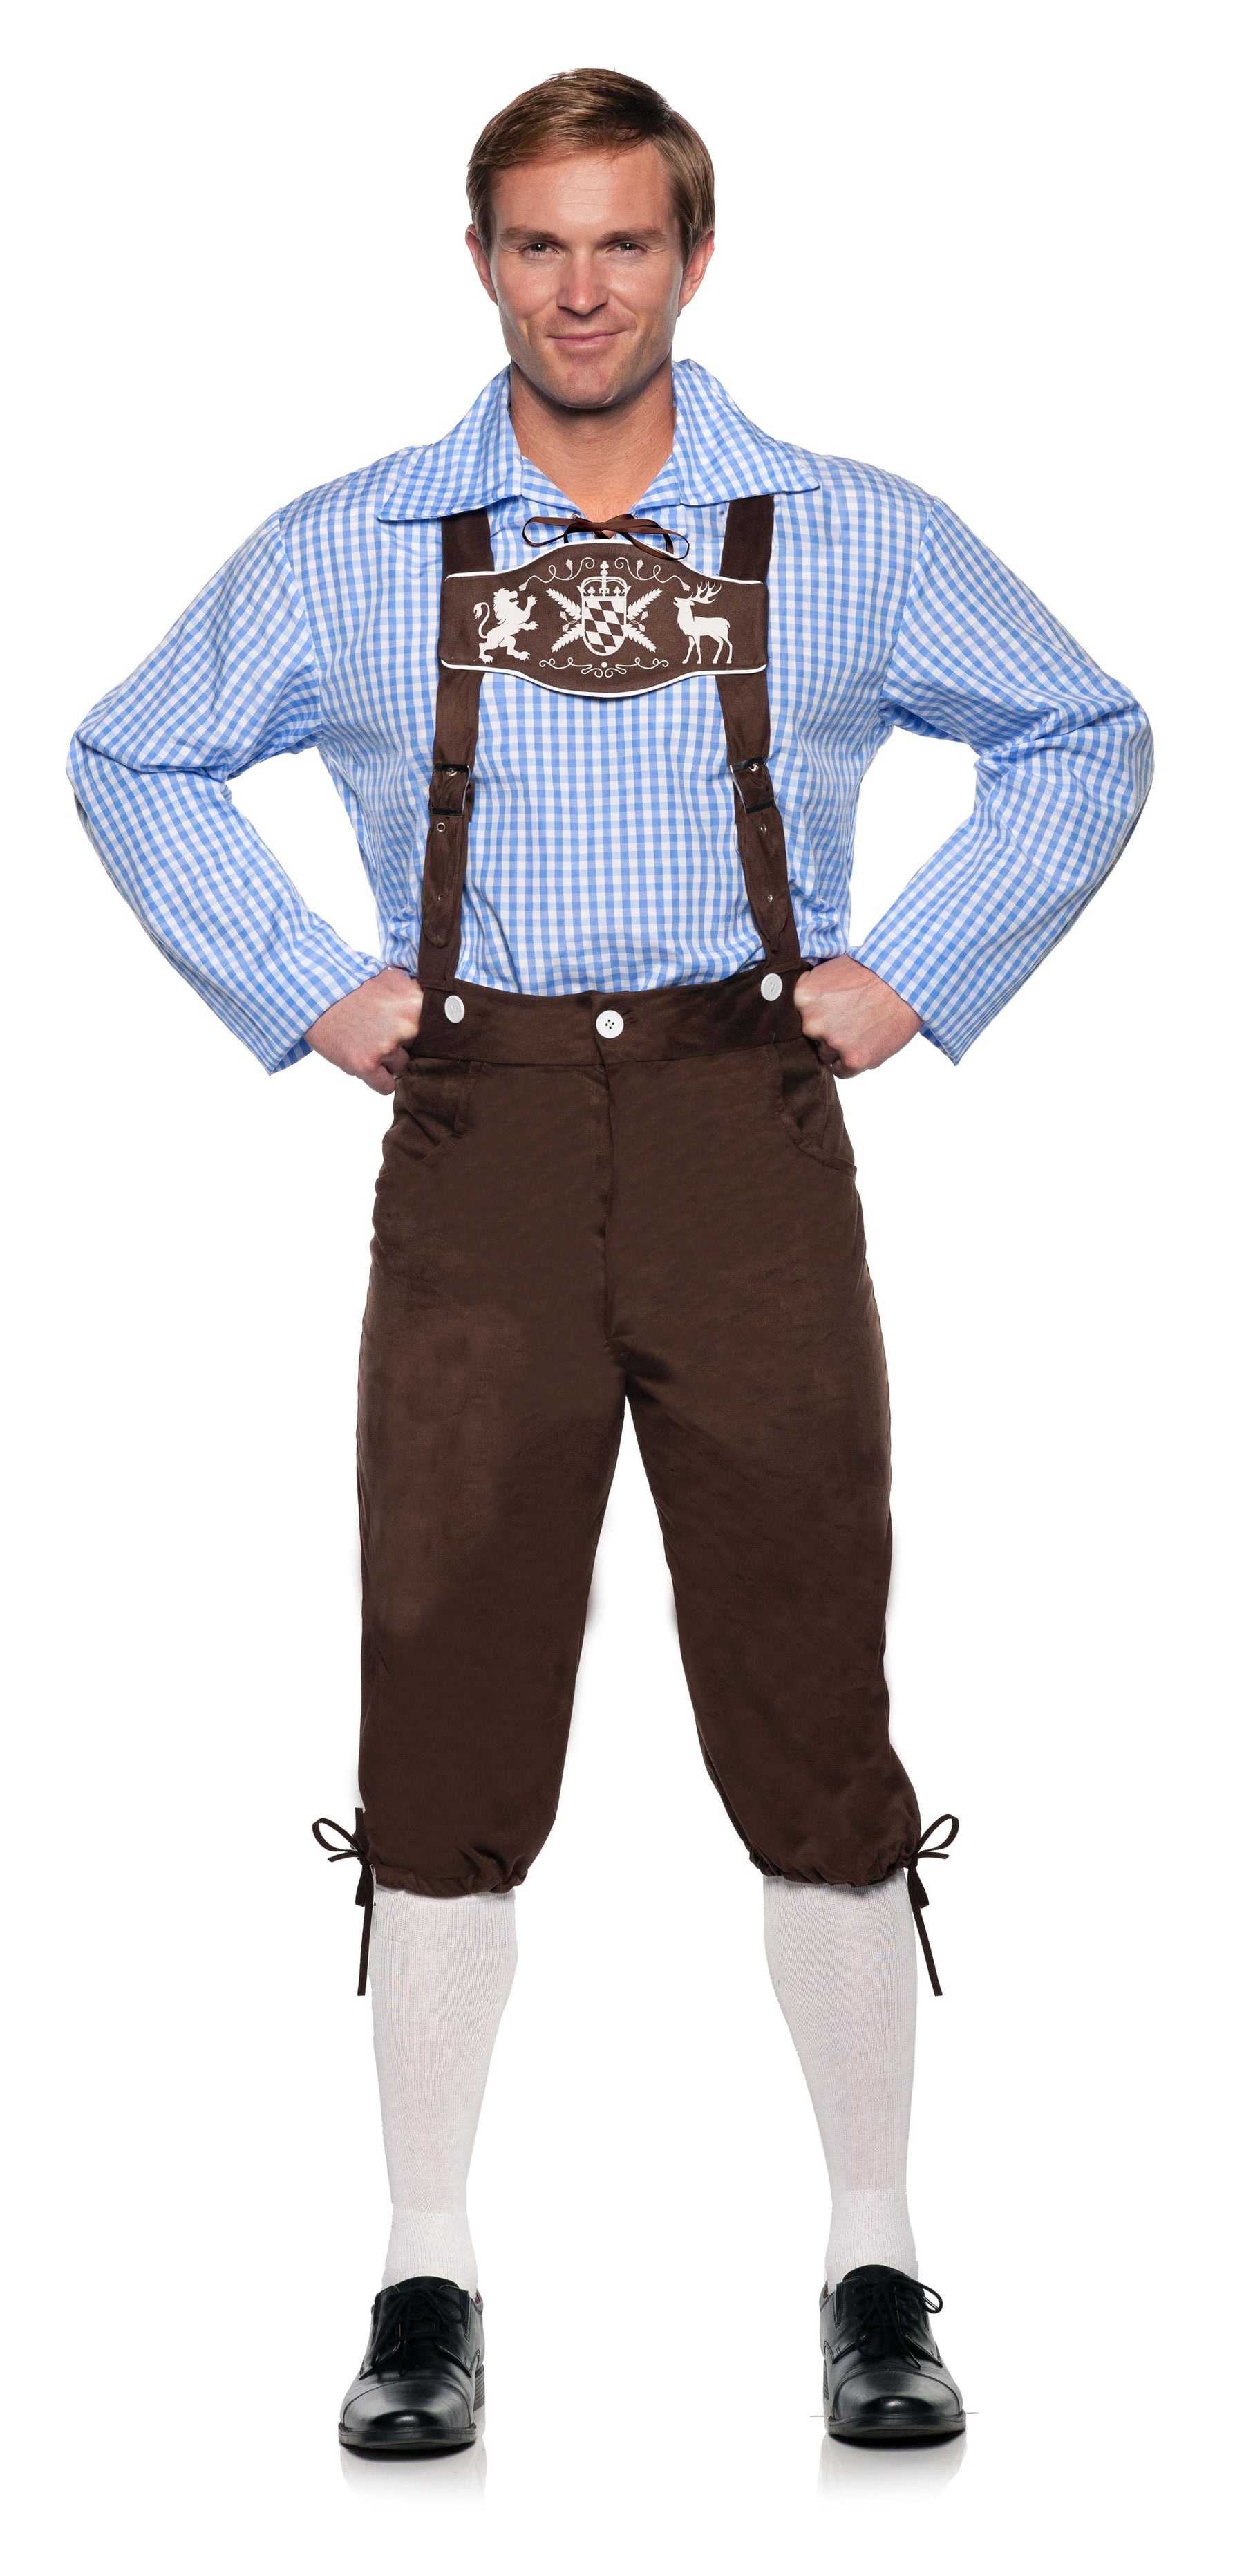 Deluxe Lederhosen Brown Adult Costume | Standard